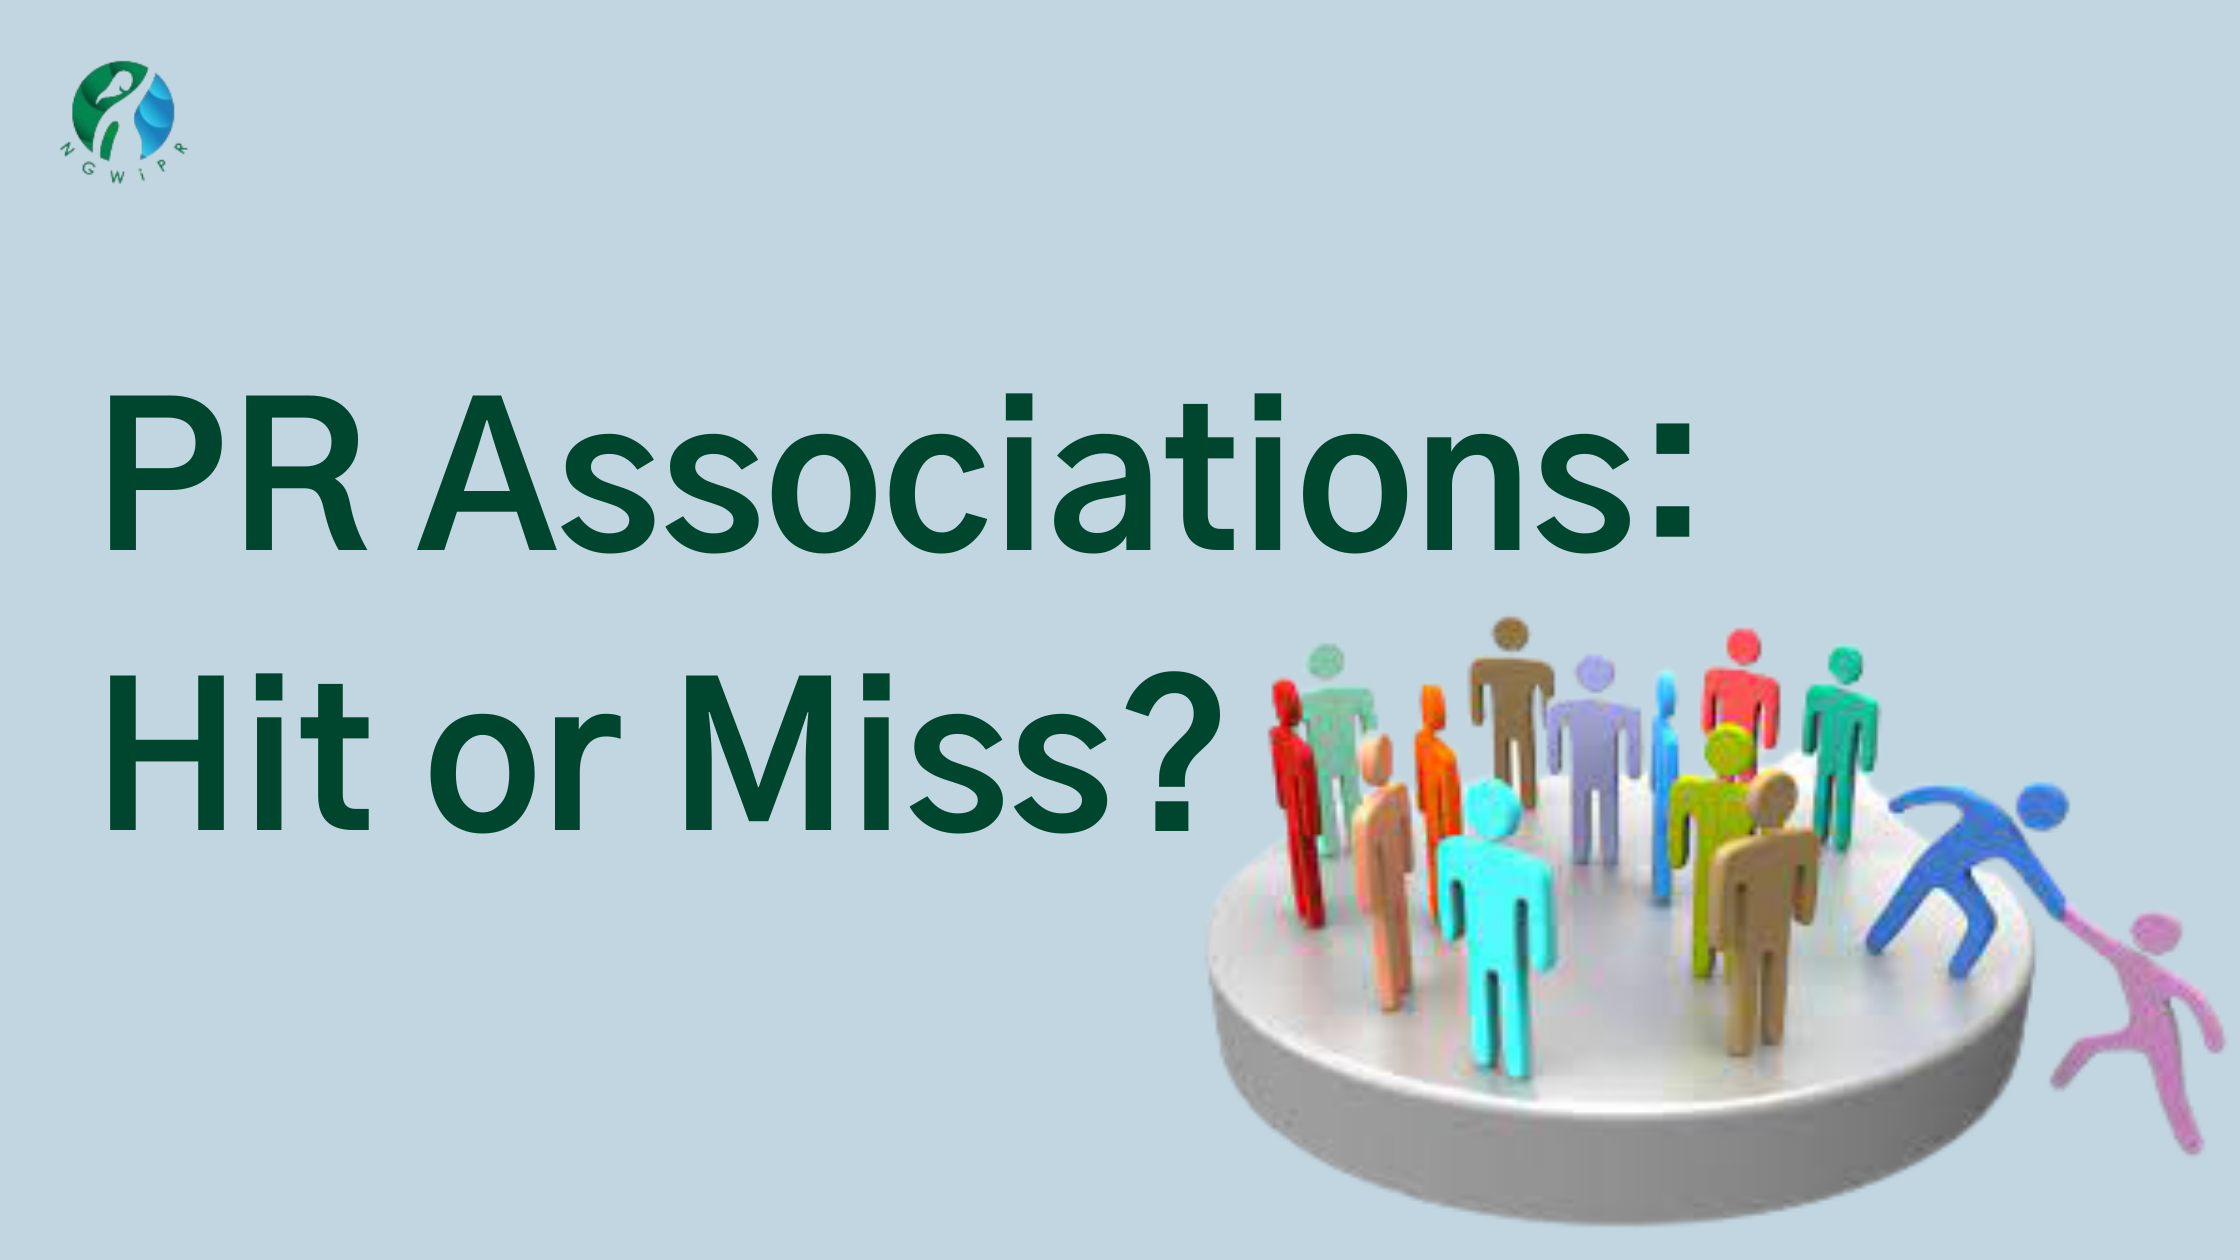 PR association: Hit or Miss